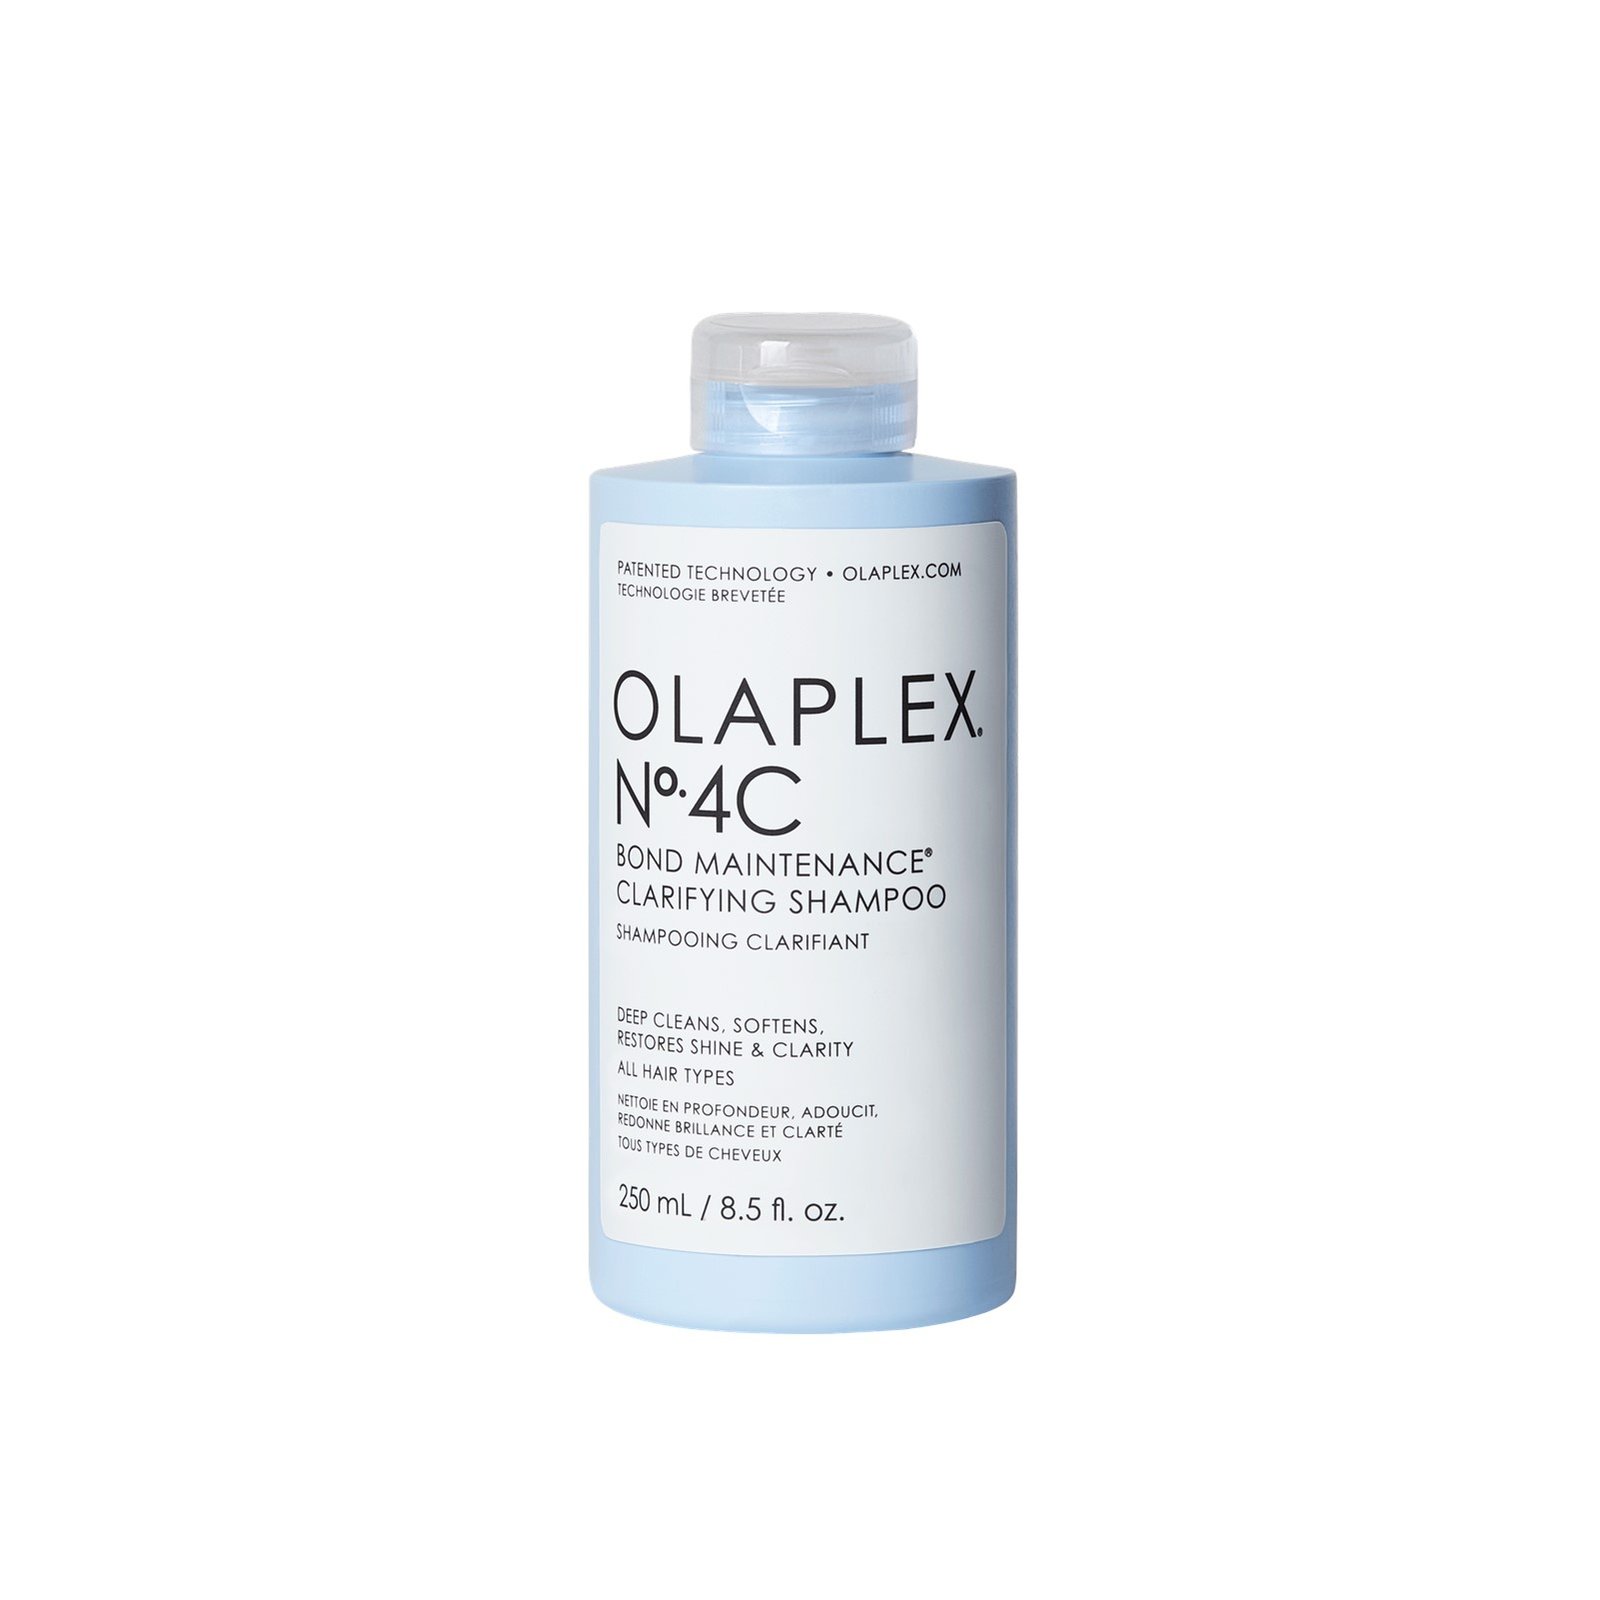 OLAPLEX Bond Maintenance Clarifying Shampoo Nº4C 250ml (8.5 fl oz)